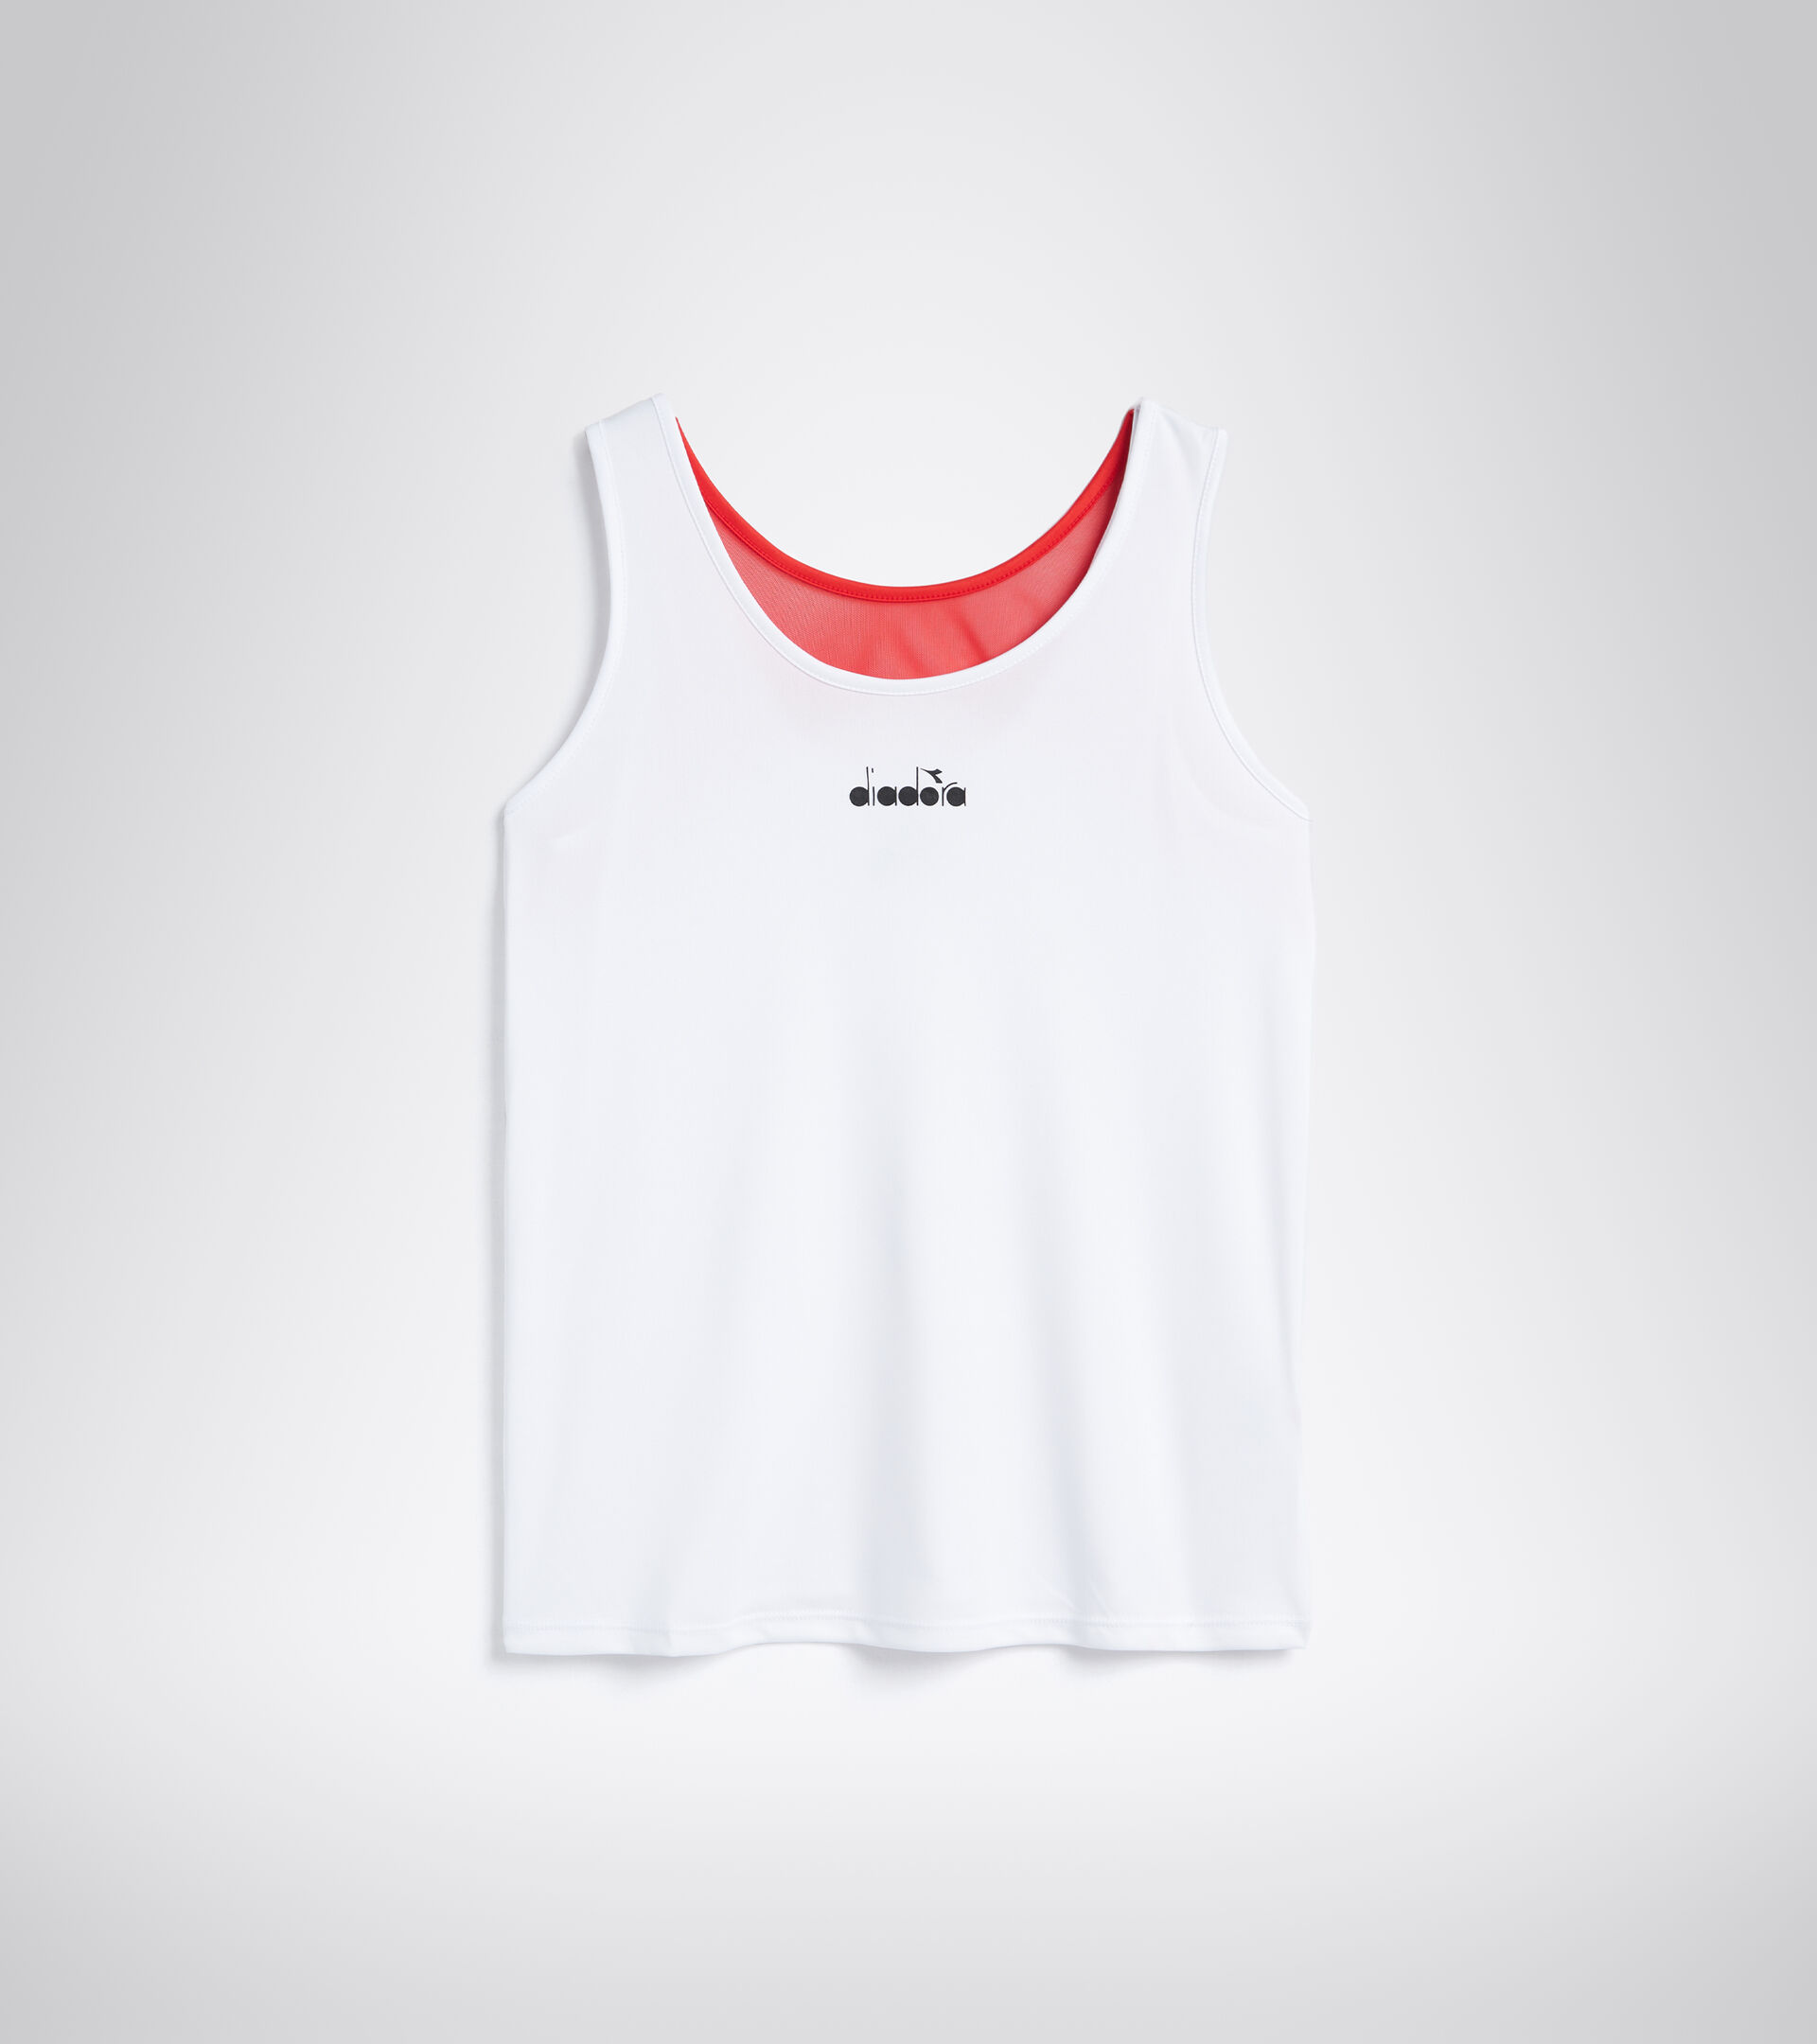 Camiseta sin mangas de tenis - Mujer L. CORE TANK BLANCO VIVO - Diadora